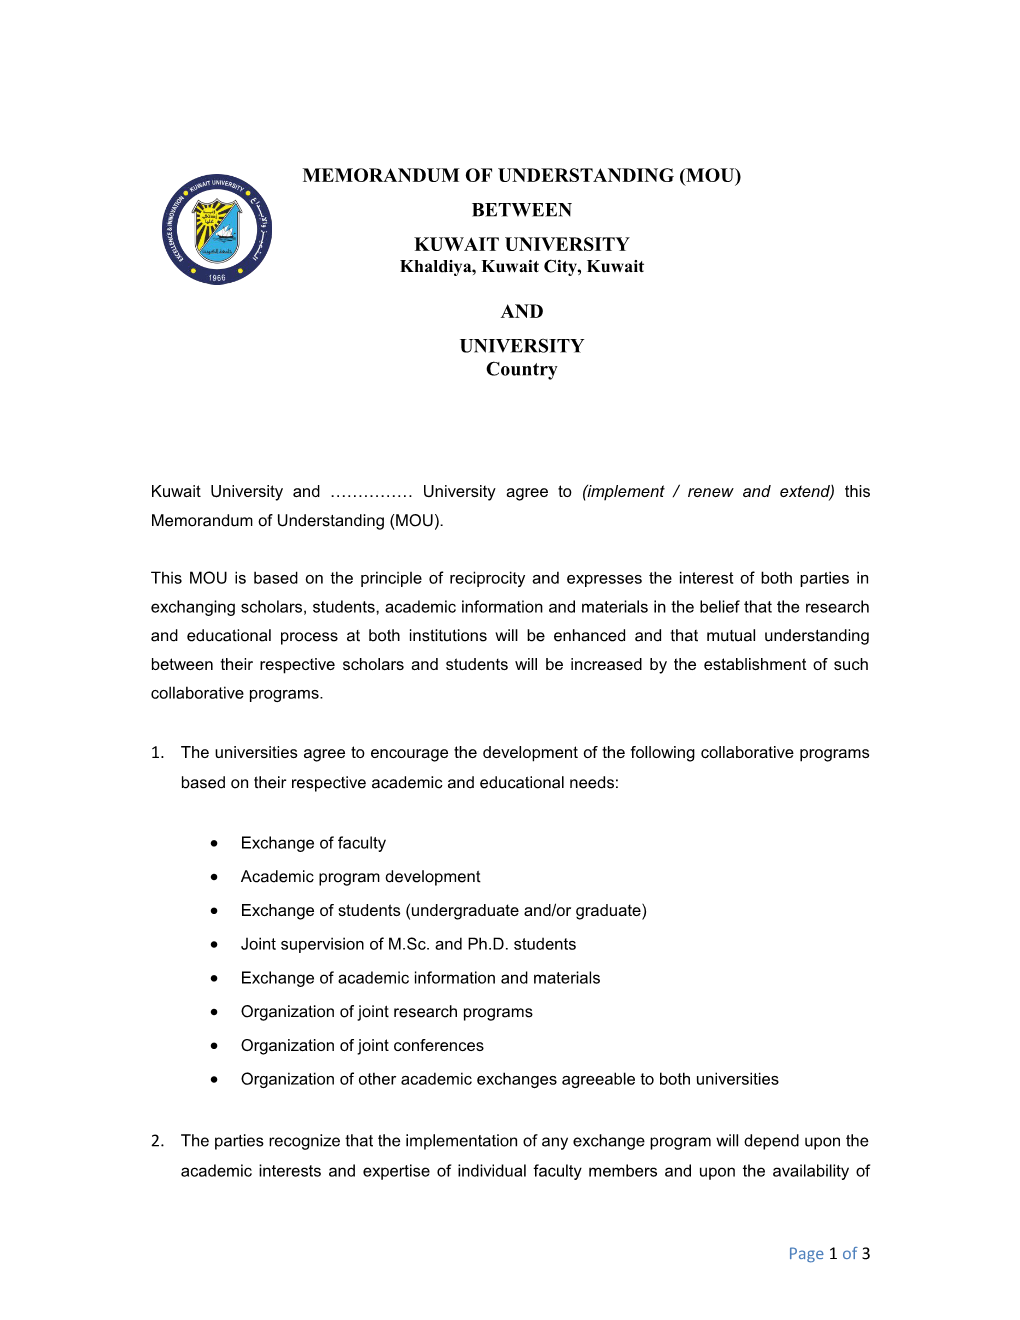 Kuwait University and Universityagree To(Implement / Renew and Extend)This Memorandum Of